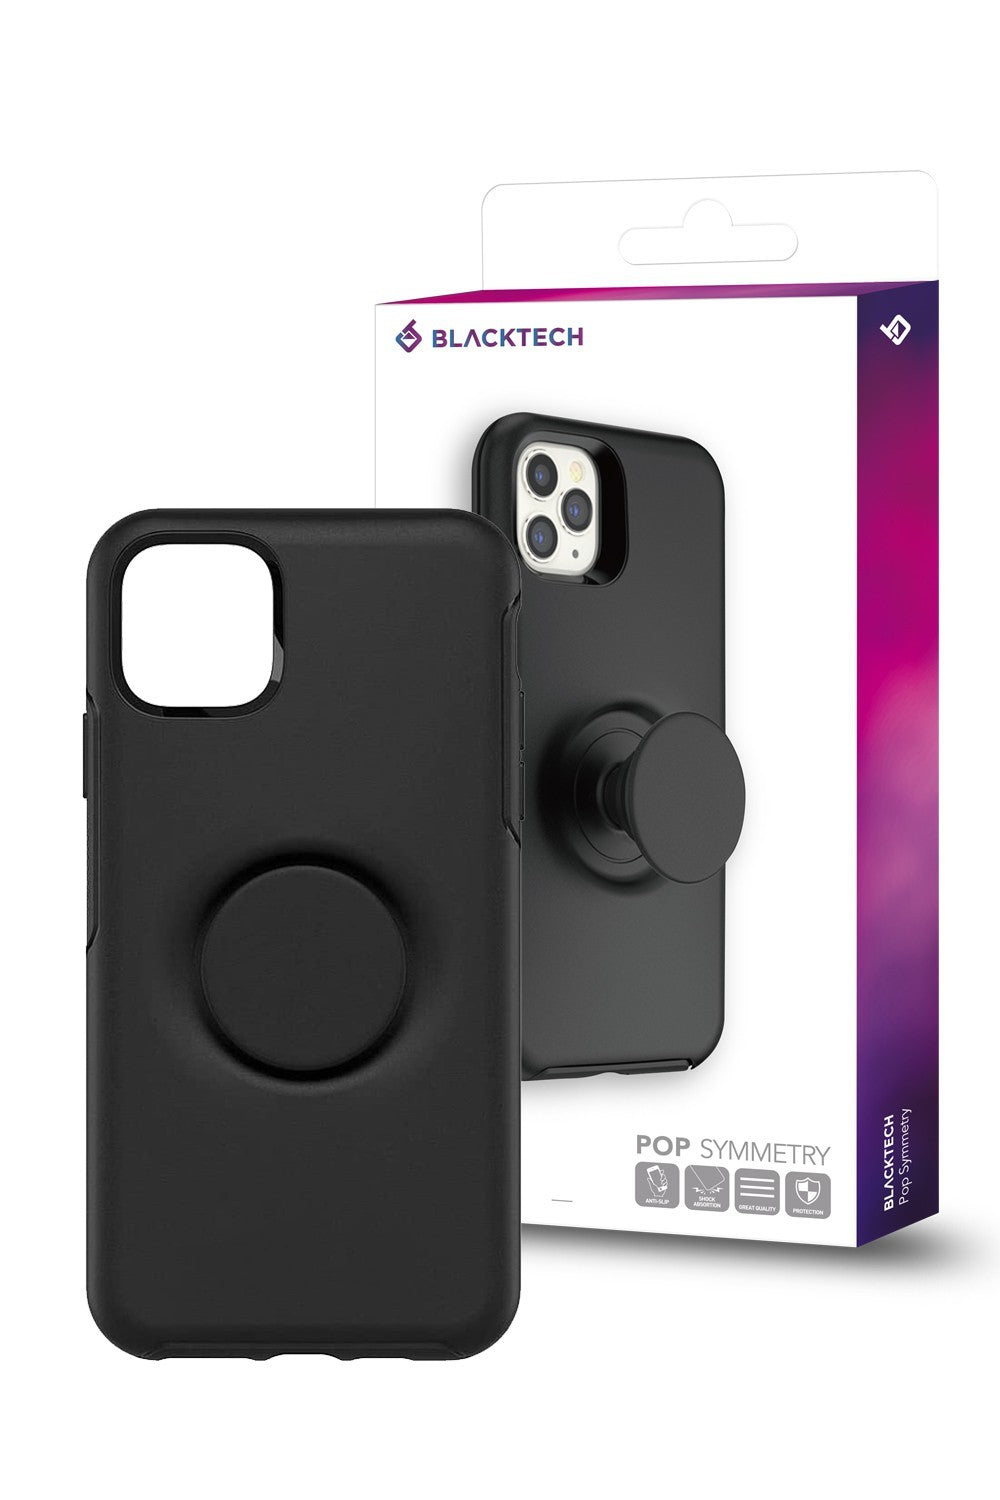 Blacktech iPhone 11 Pro Symmetry Pop Up Protective Case